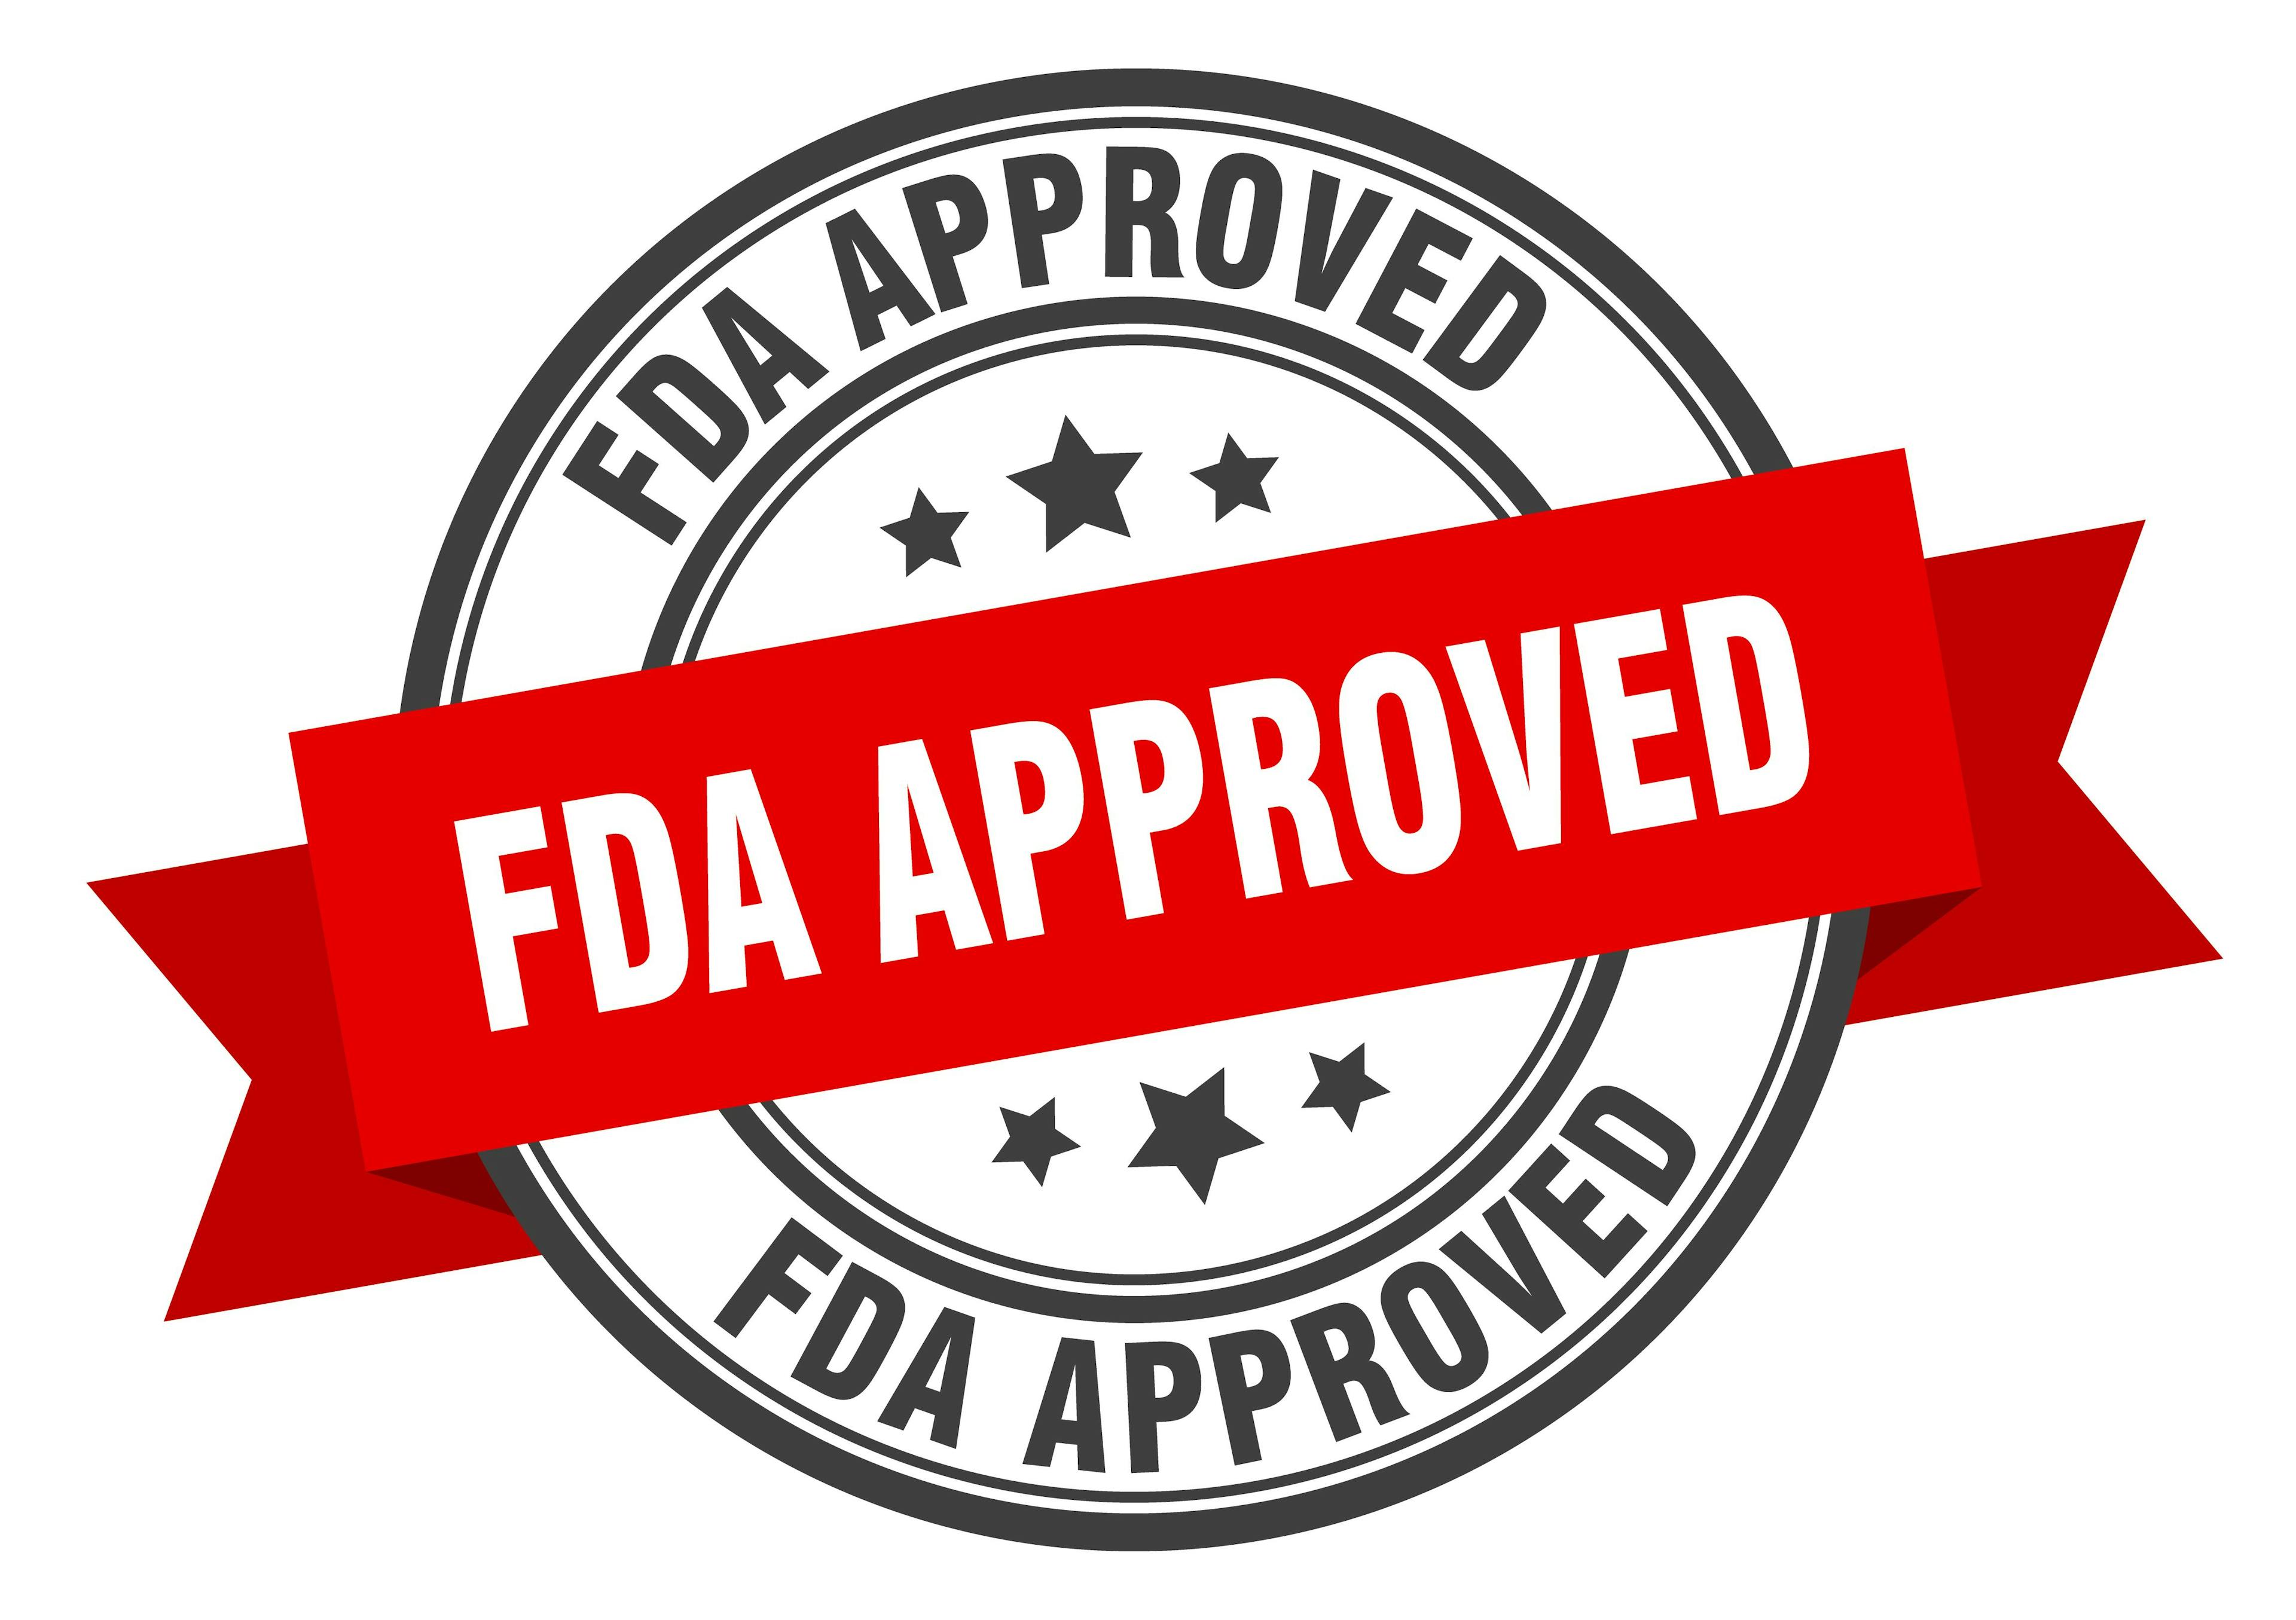 fda approved label | Image Credit: Aquir - stock.adobe.com